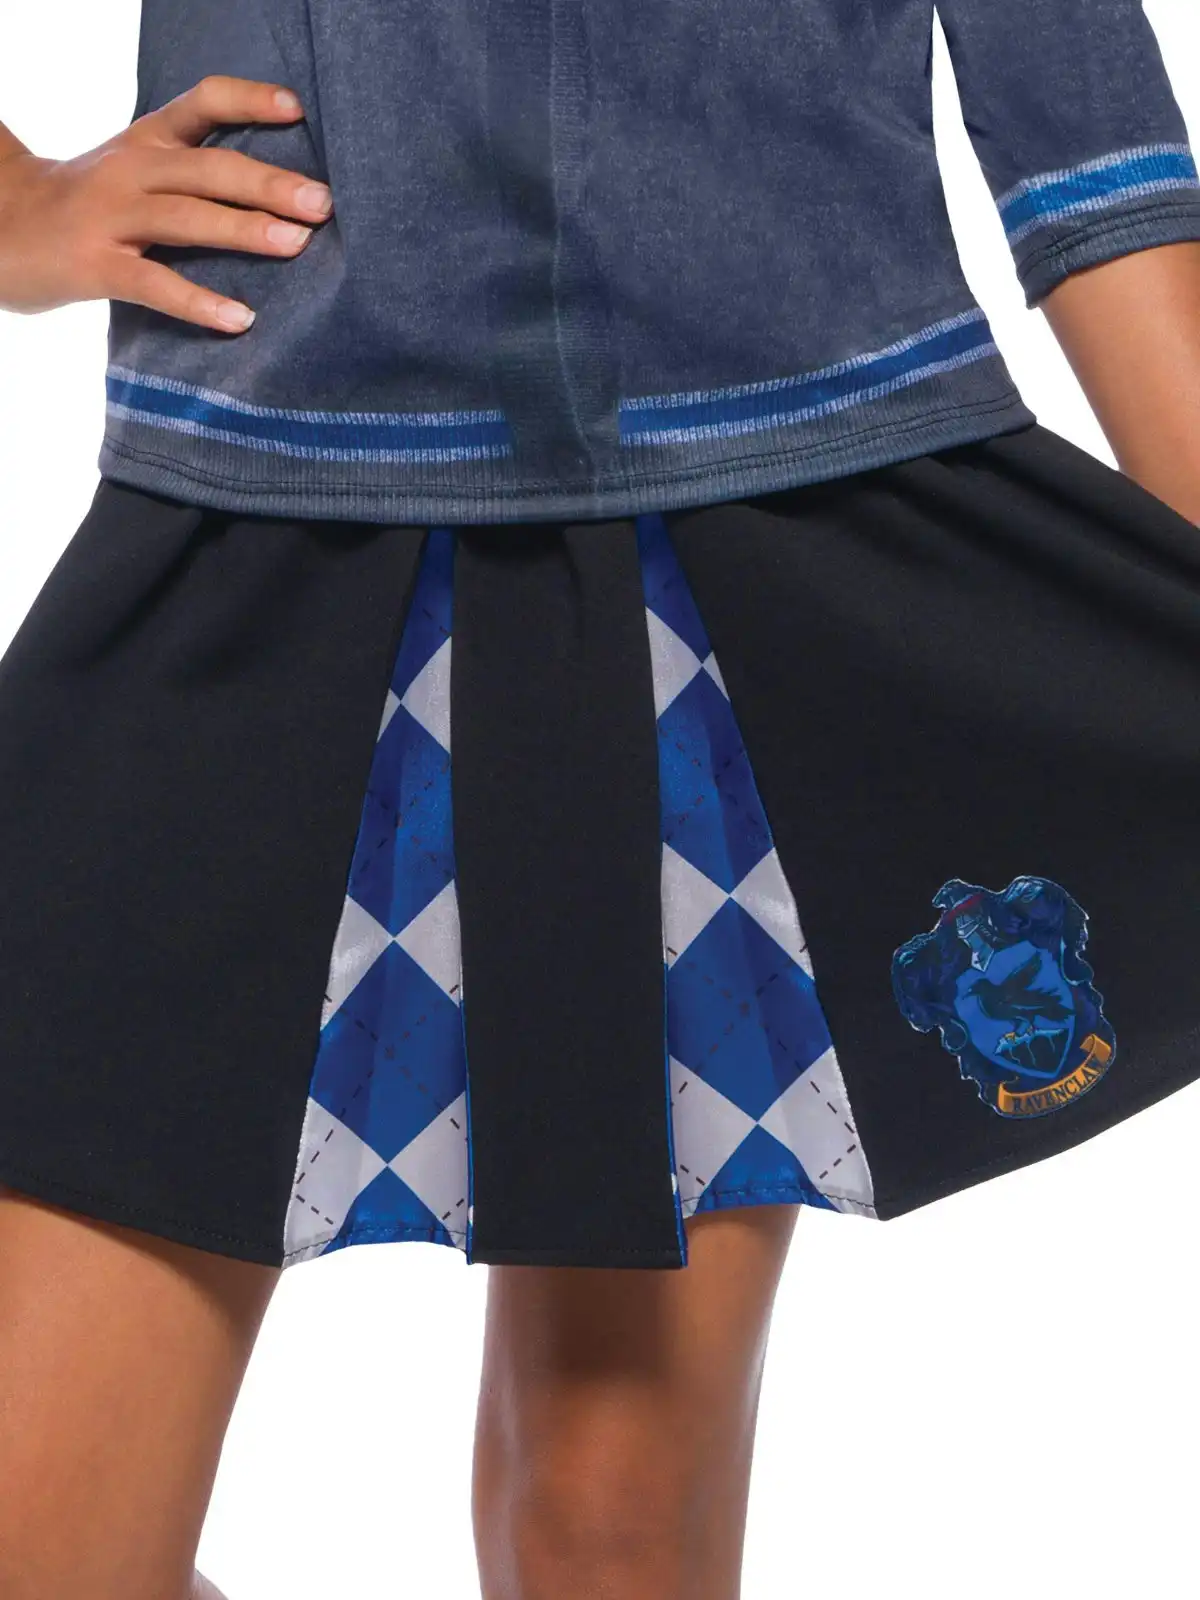 Harry Potter Ravenclaw Kids/Child Skirt Dress Up Party Costume Girls One Size